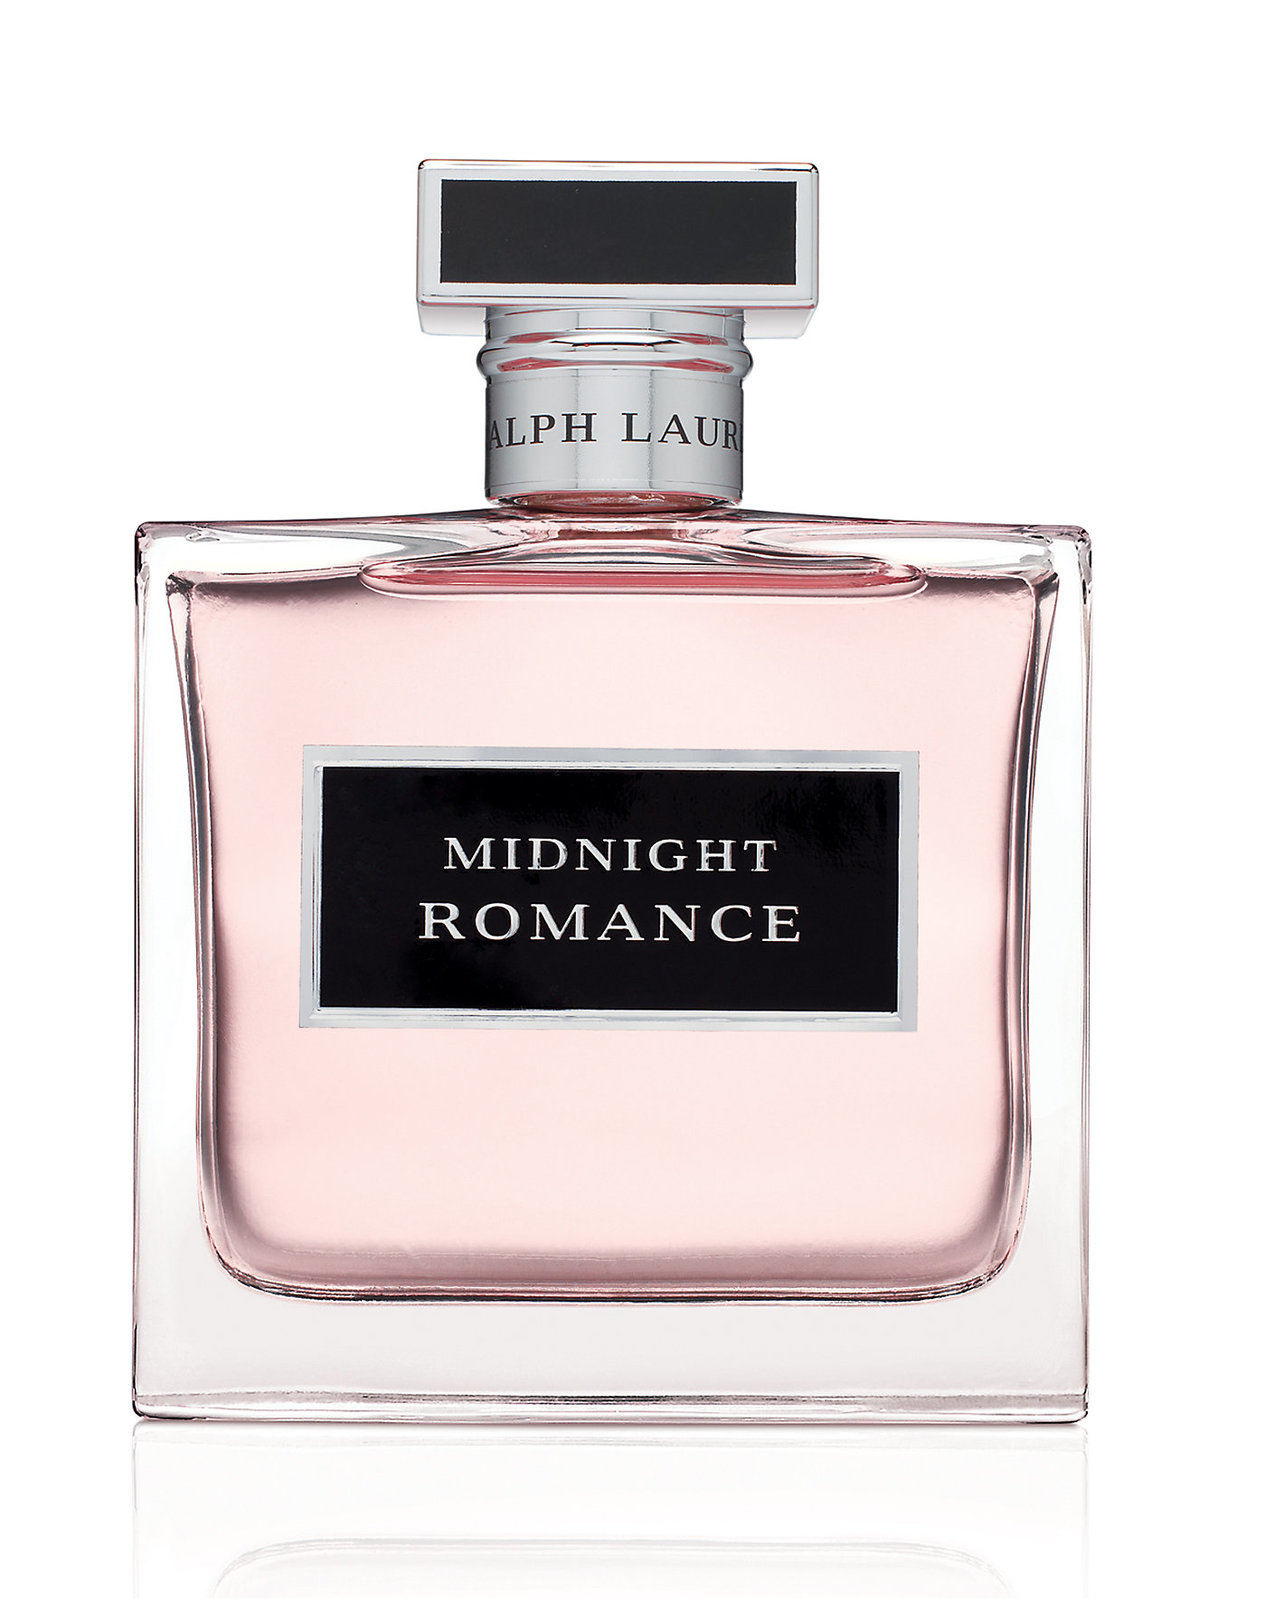 Midnight Romance by Ralph Lauren